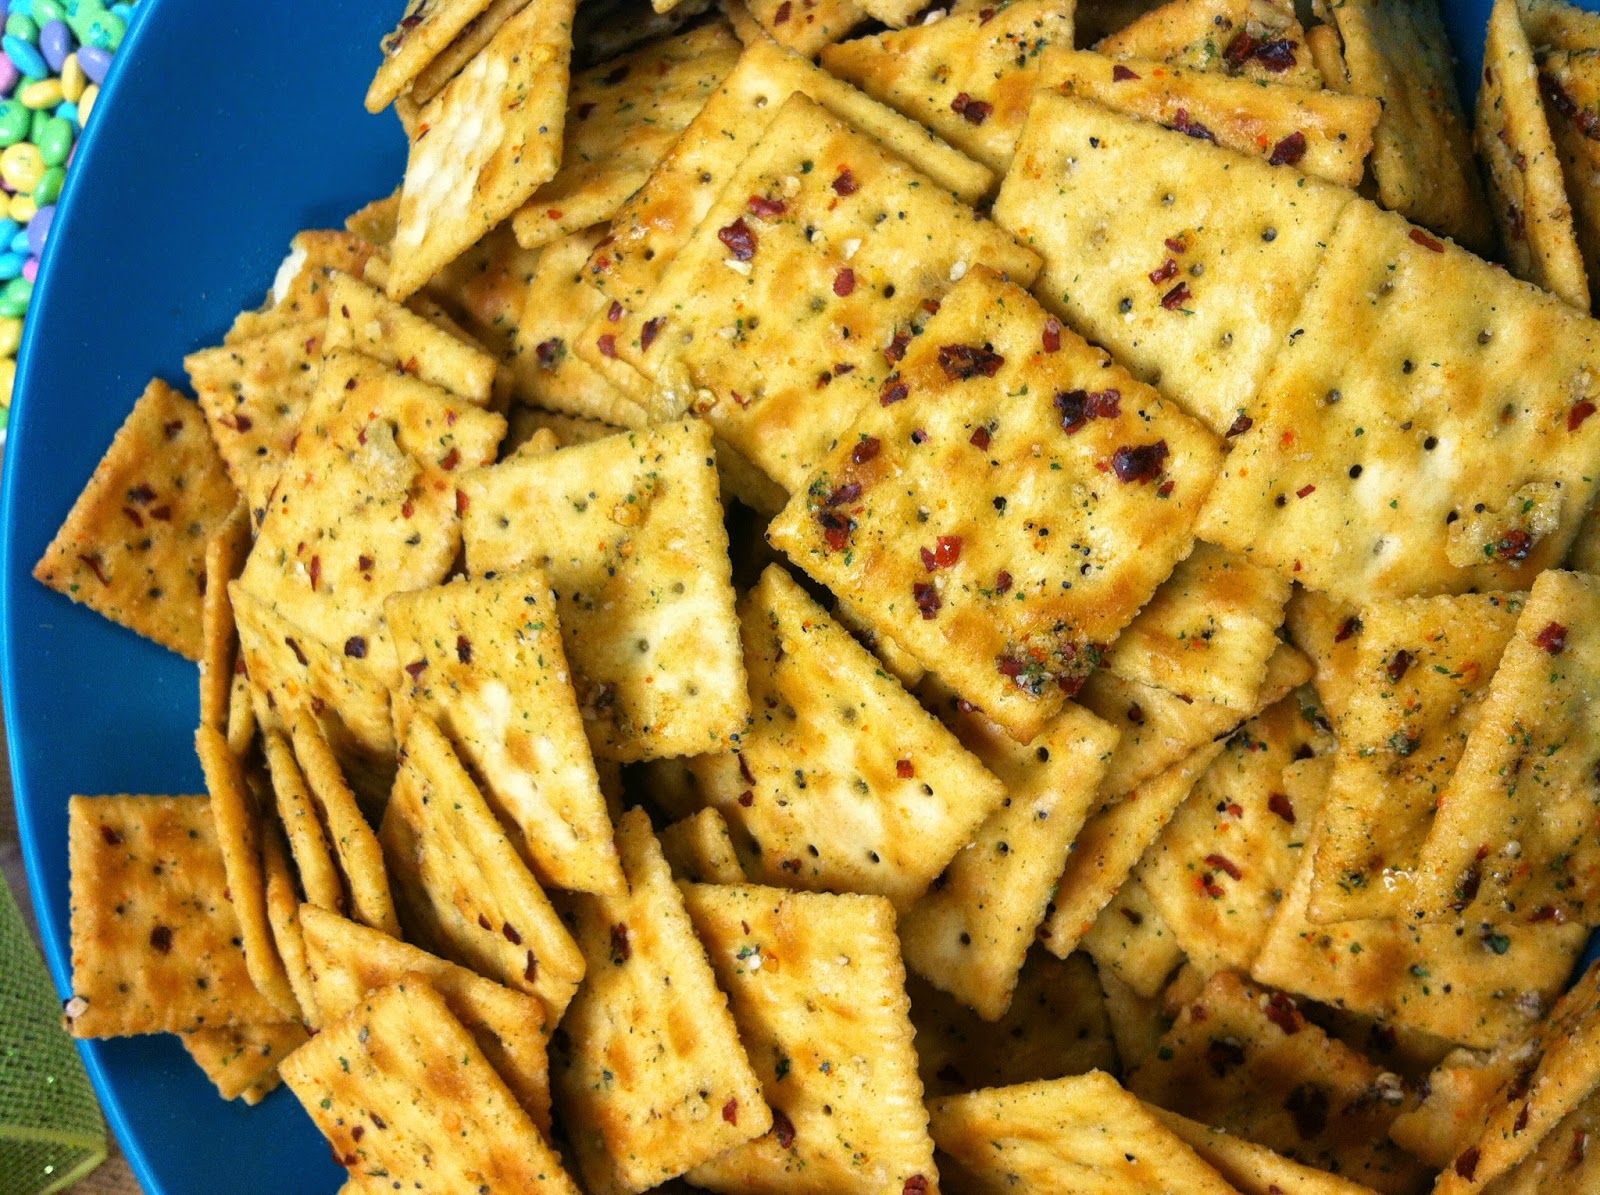 http://4.bp.blogspot.com/-T0zgSGAx4eU/U2gW0-Mw_RI/AAAAAAAASmc/OY4yoLqCp8g/s1600/fire+crackers+with+salad+supreme.JPG